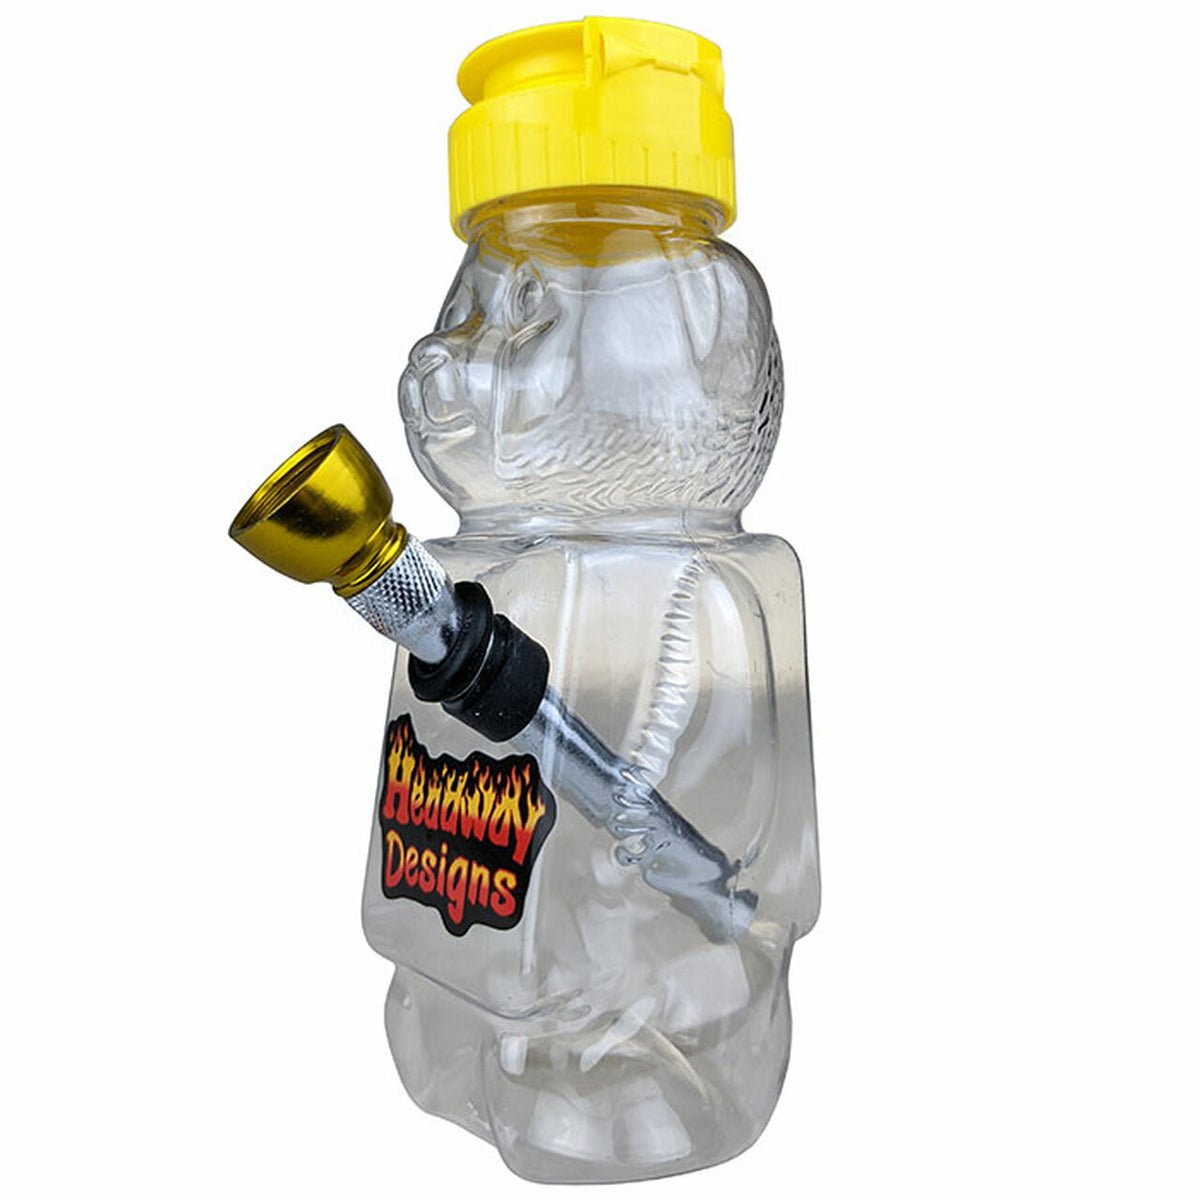 6” acrylic Honey Bear Water Pipe WoB